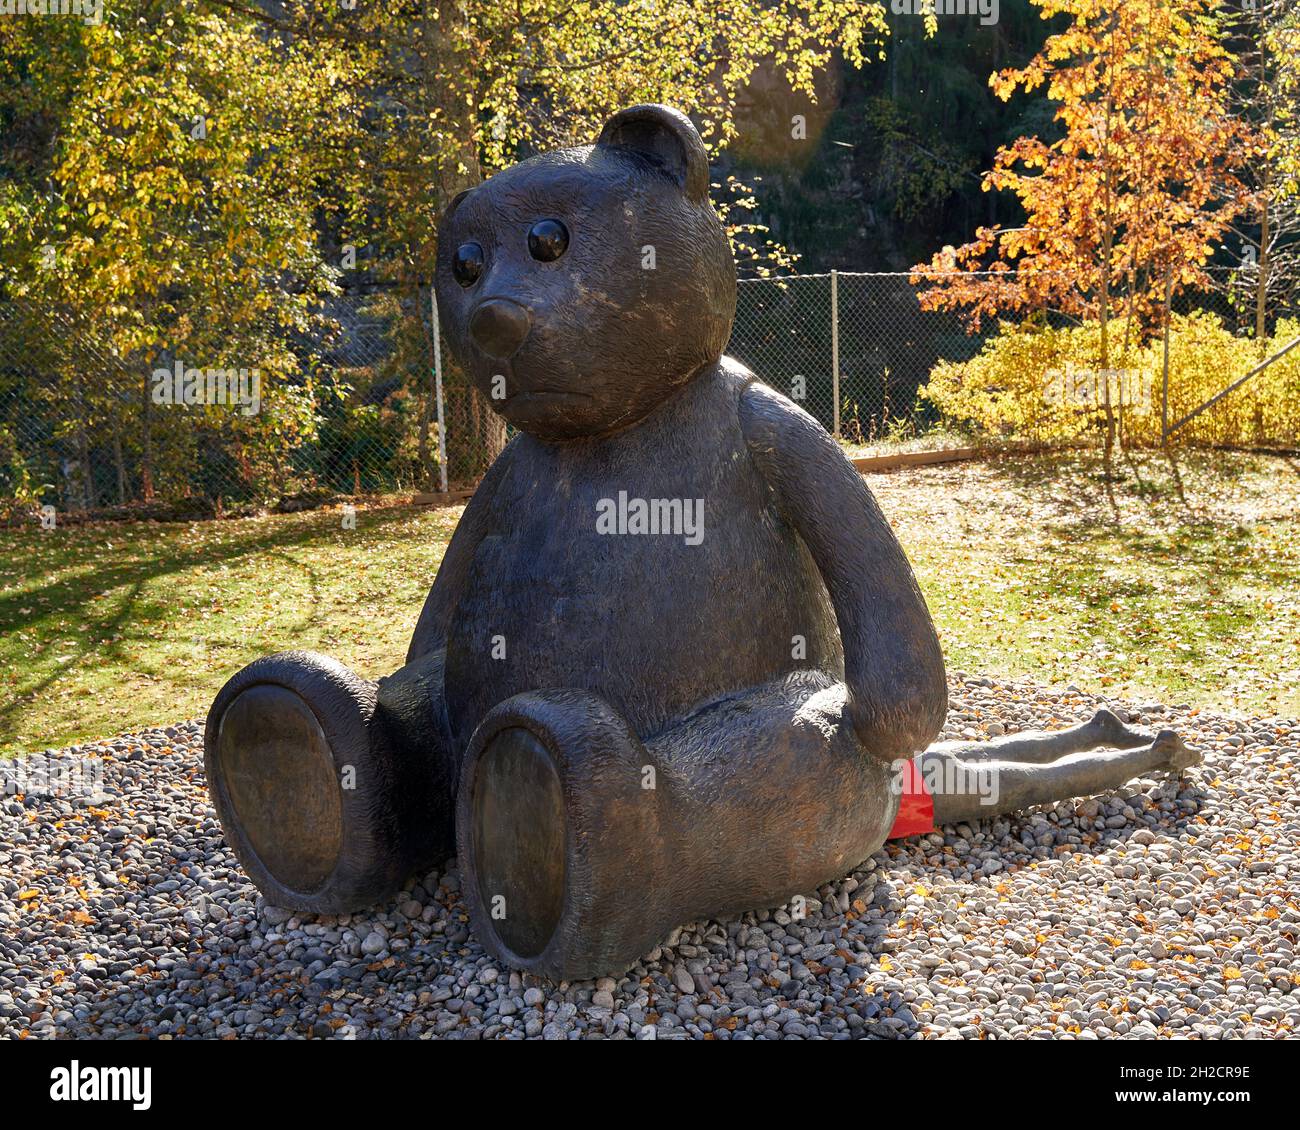 JEVNAKER, NORWEGEN - 25. Sep 2021: Der Teddy - das Tier der hedonischen Laufbandskulptur von Fredrik Raddum in Jevnaker, Norwegen Stockfoto